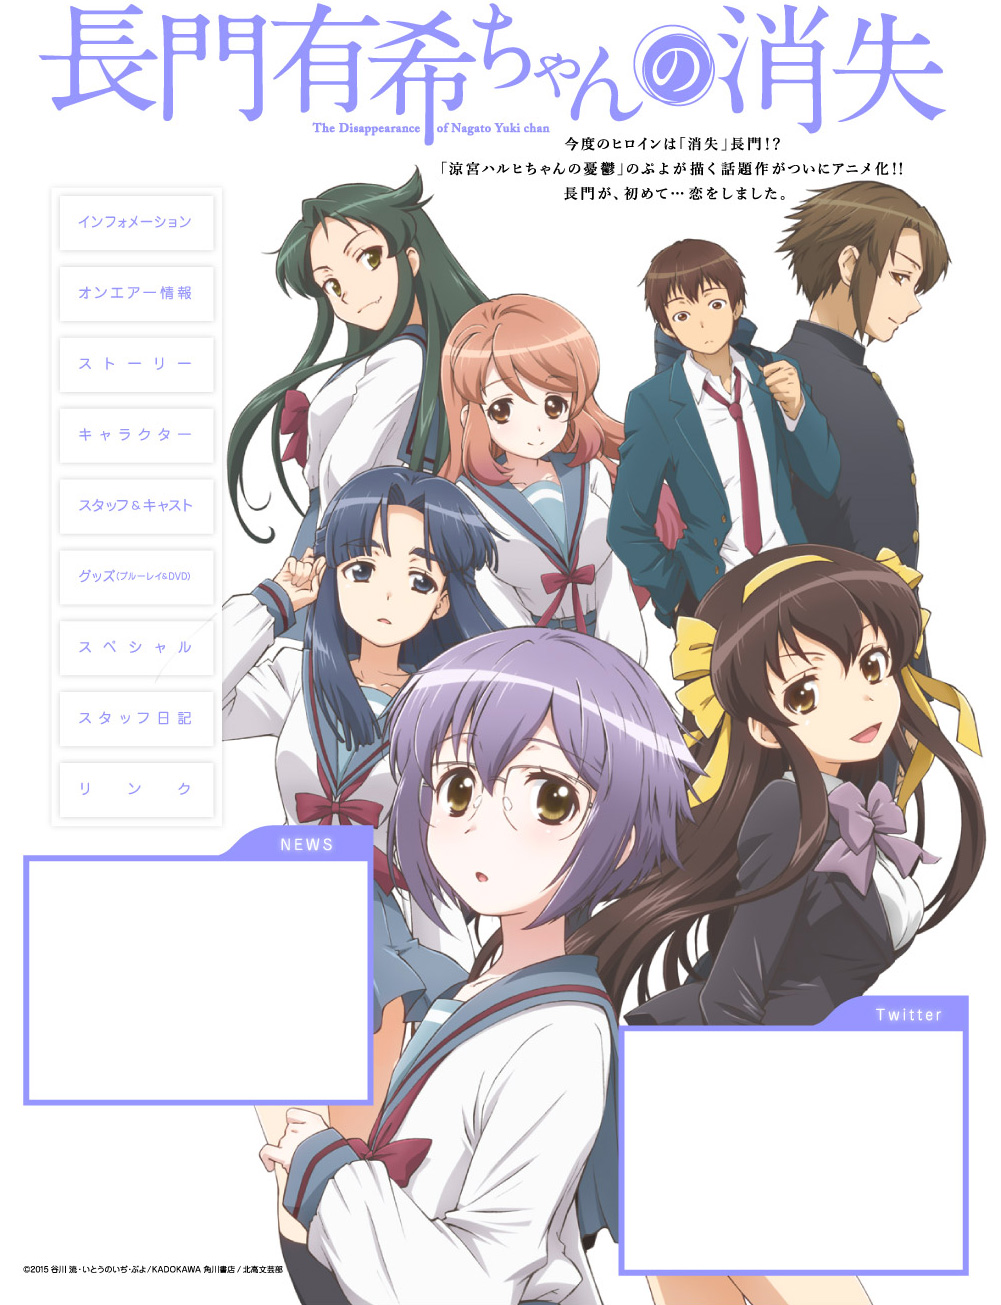 The-Disappearance-of-Nagato-Yuki-Chan-Anime-Visual-2-Website